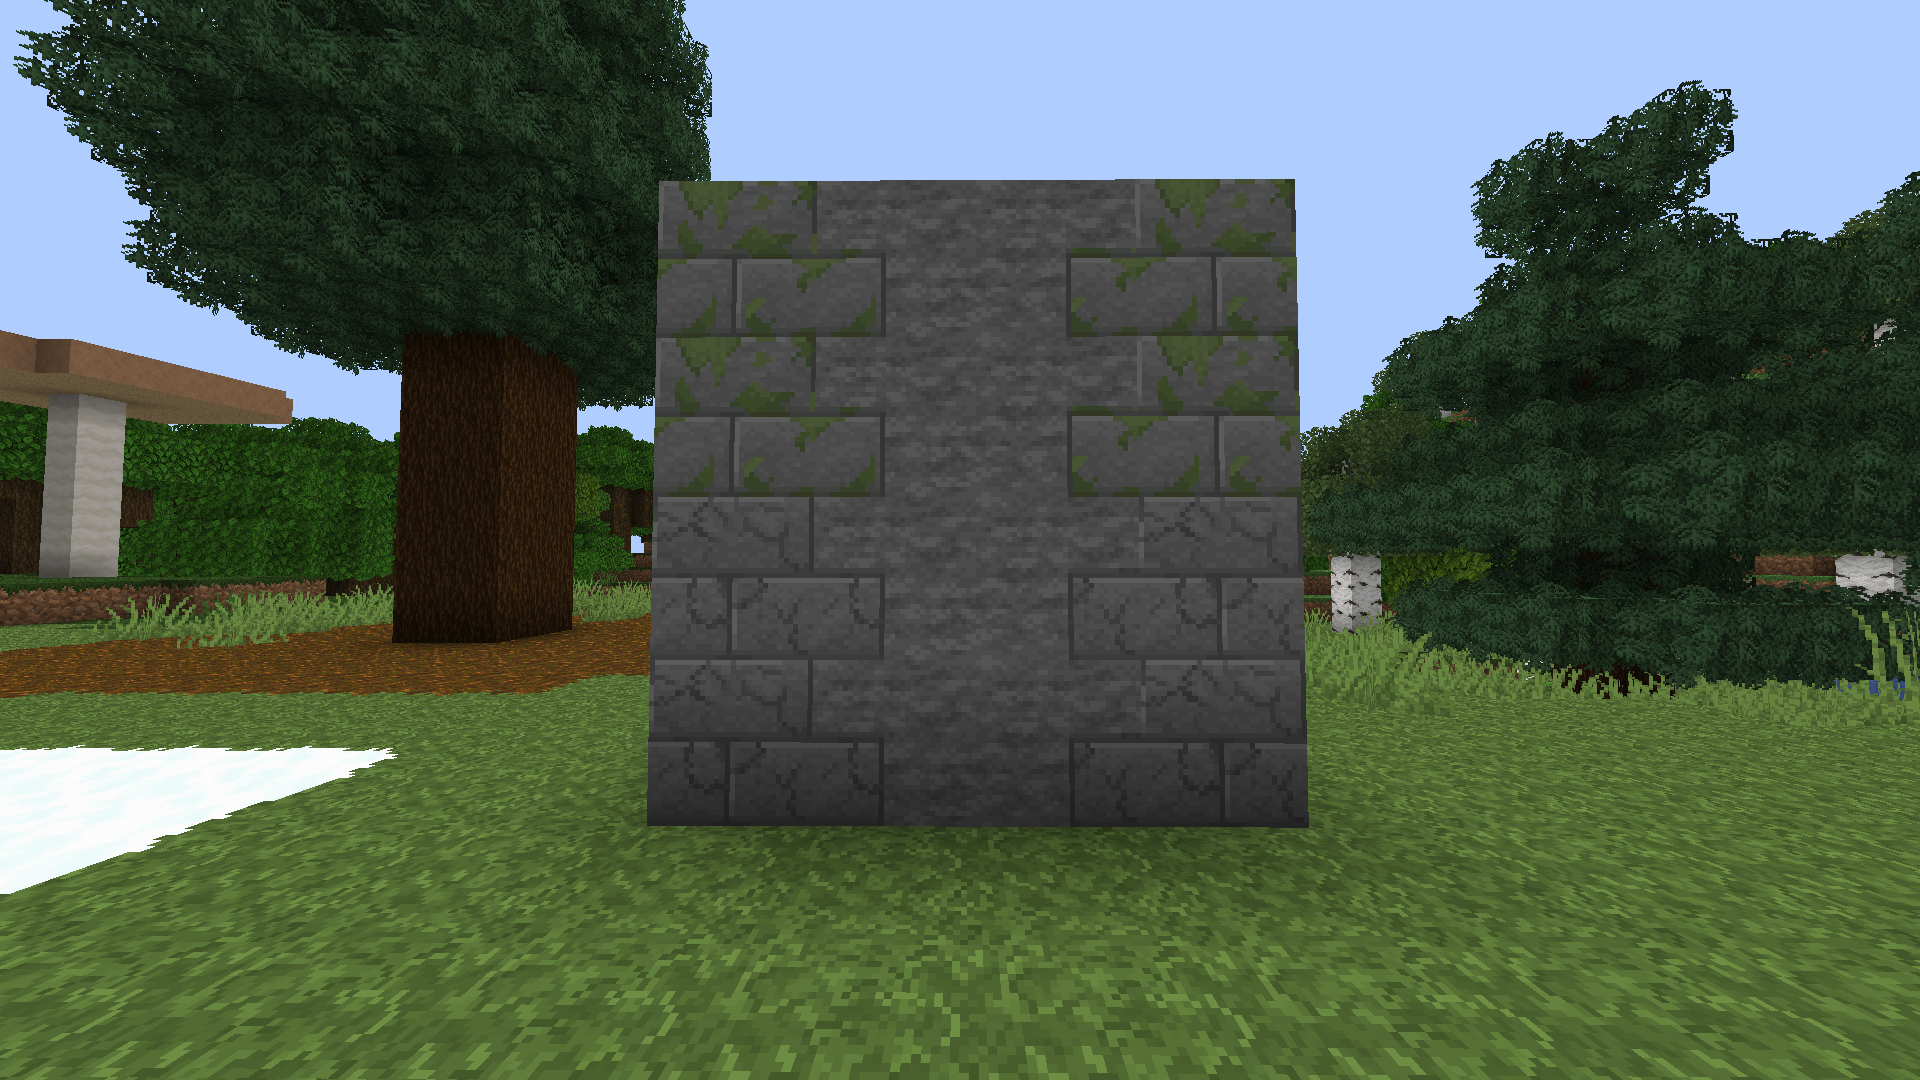 Other Stone Brick Variants